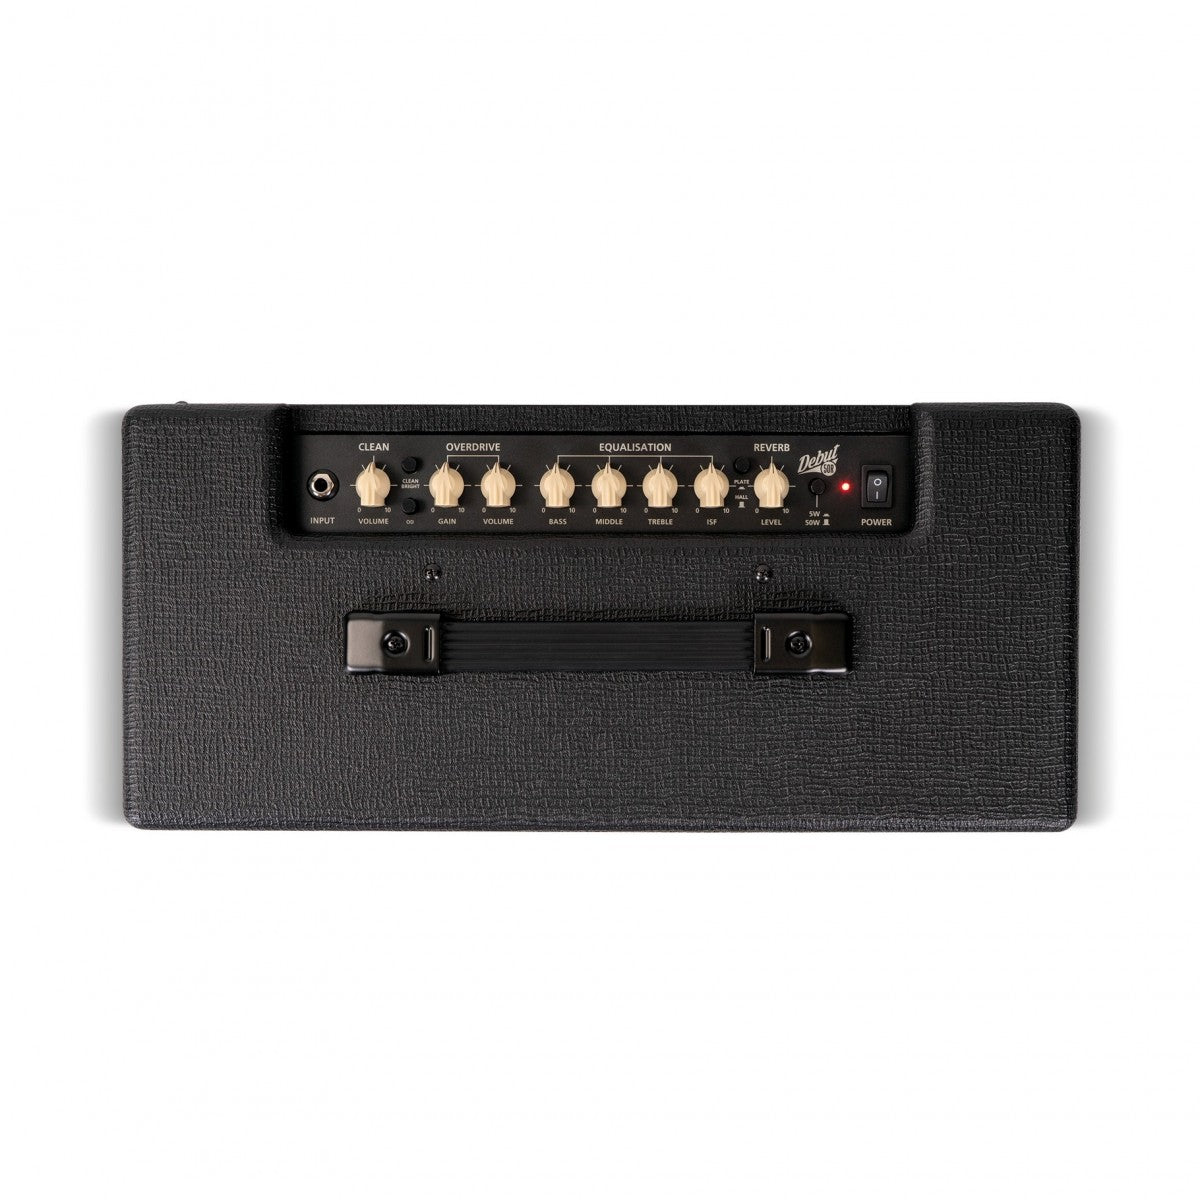 Blackstar Debut 50R 50w 1x12 Combo Guitar Amplifier - Black